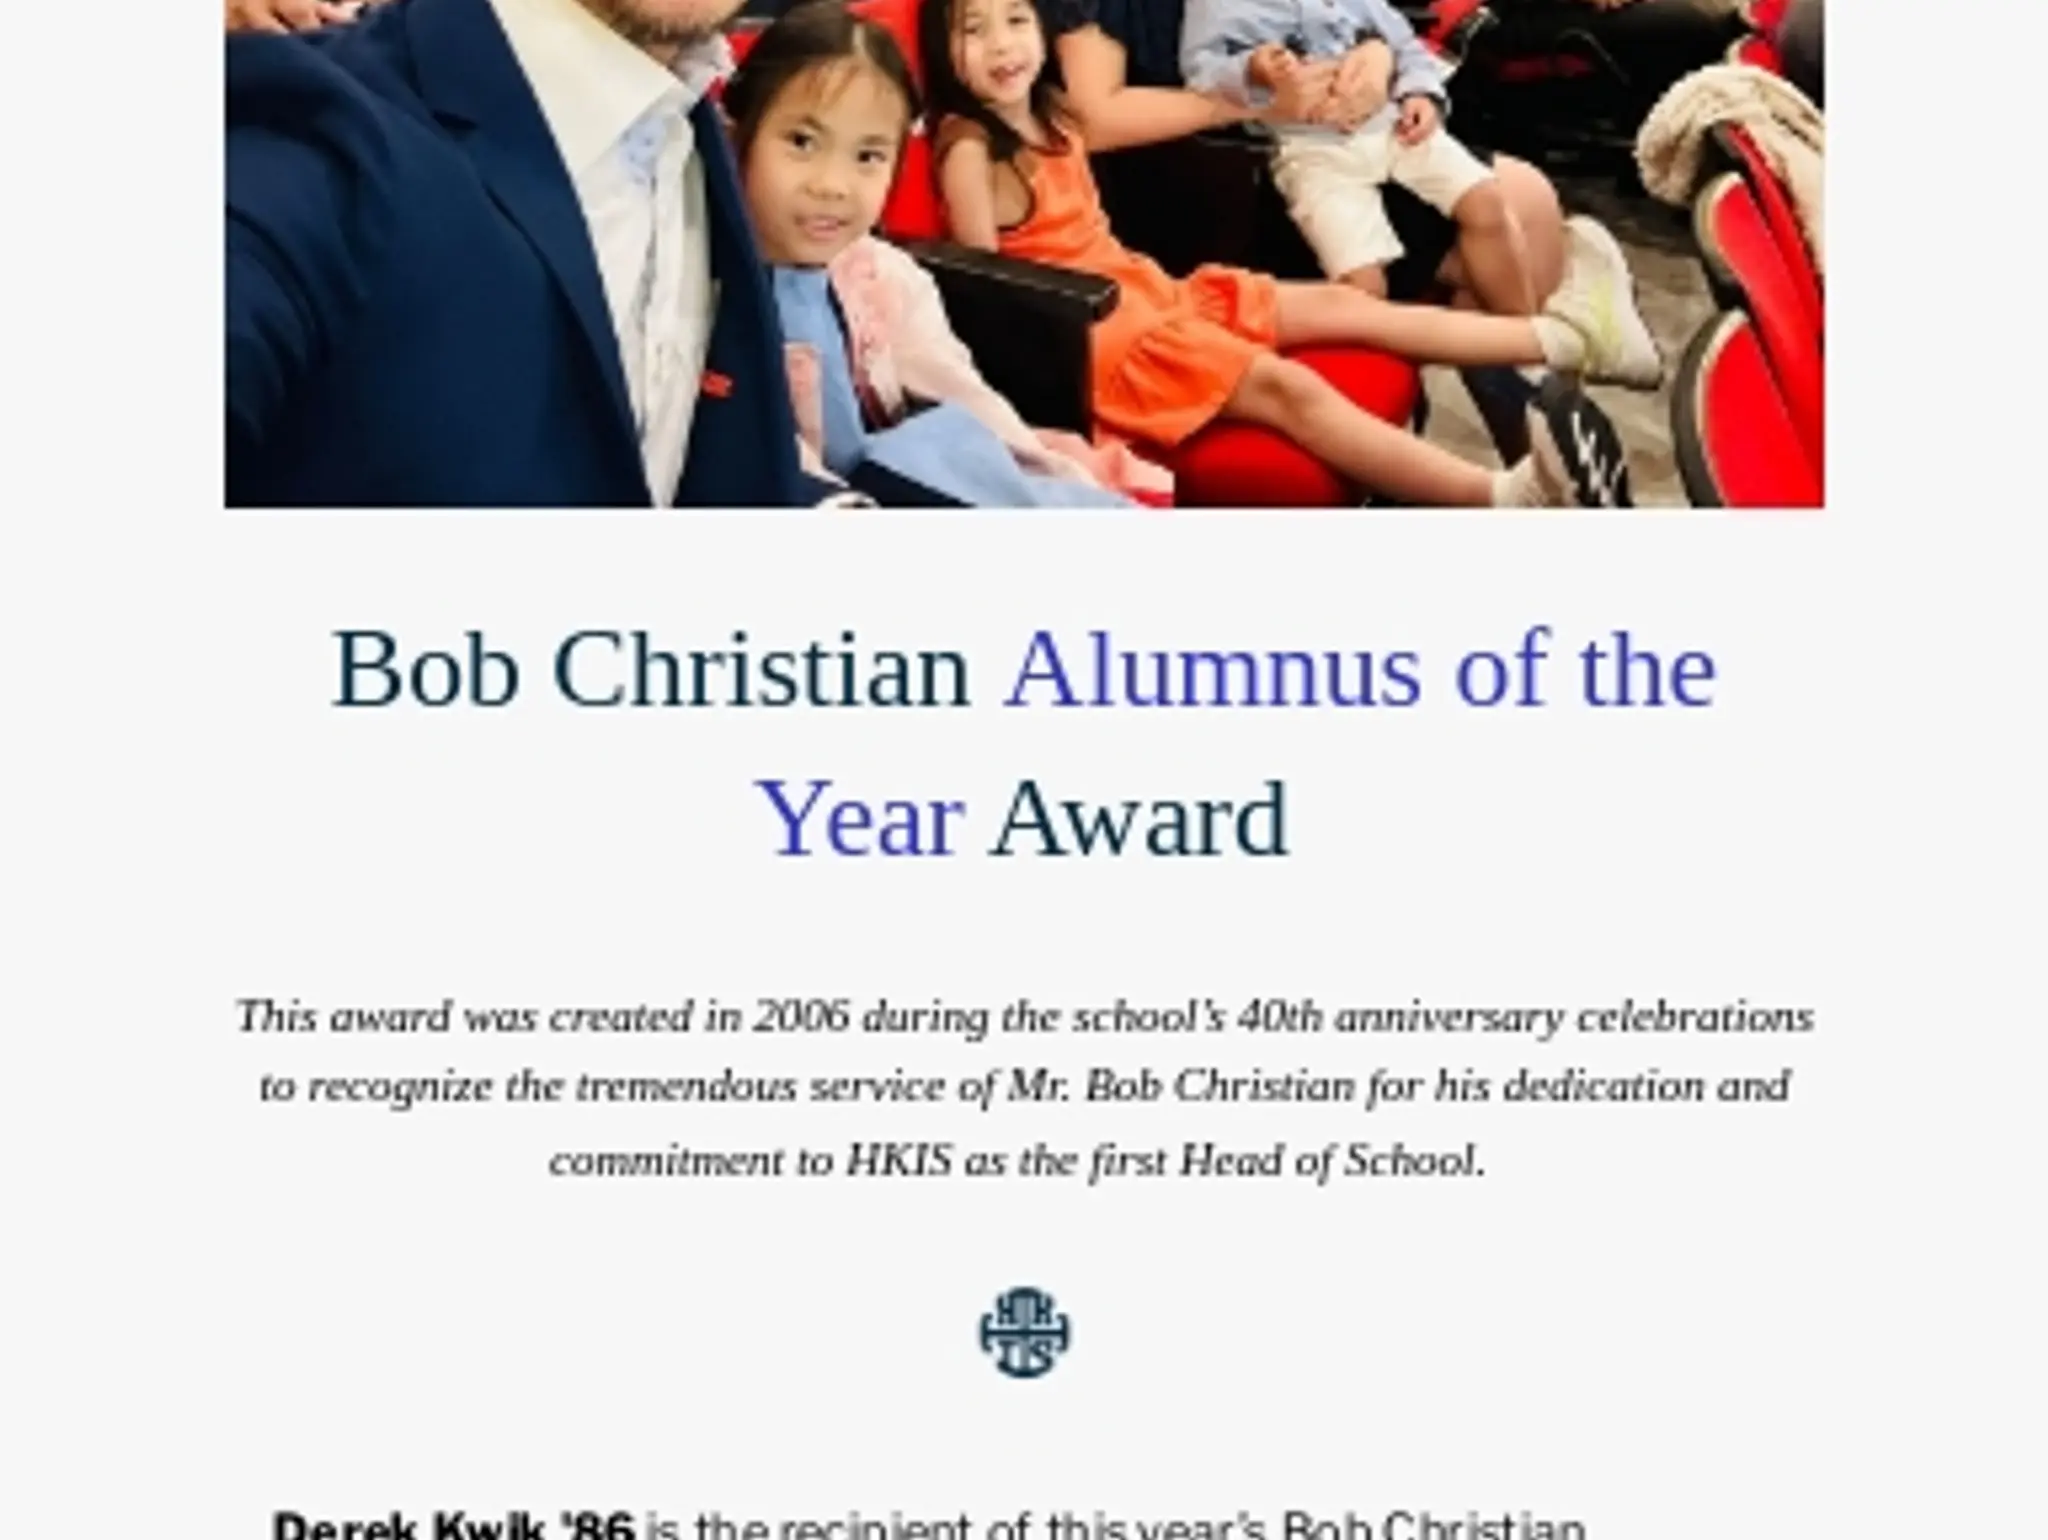 Bob Christian Alumnus of the Year Message